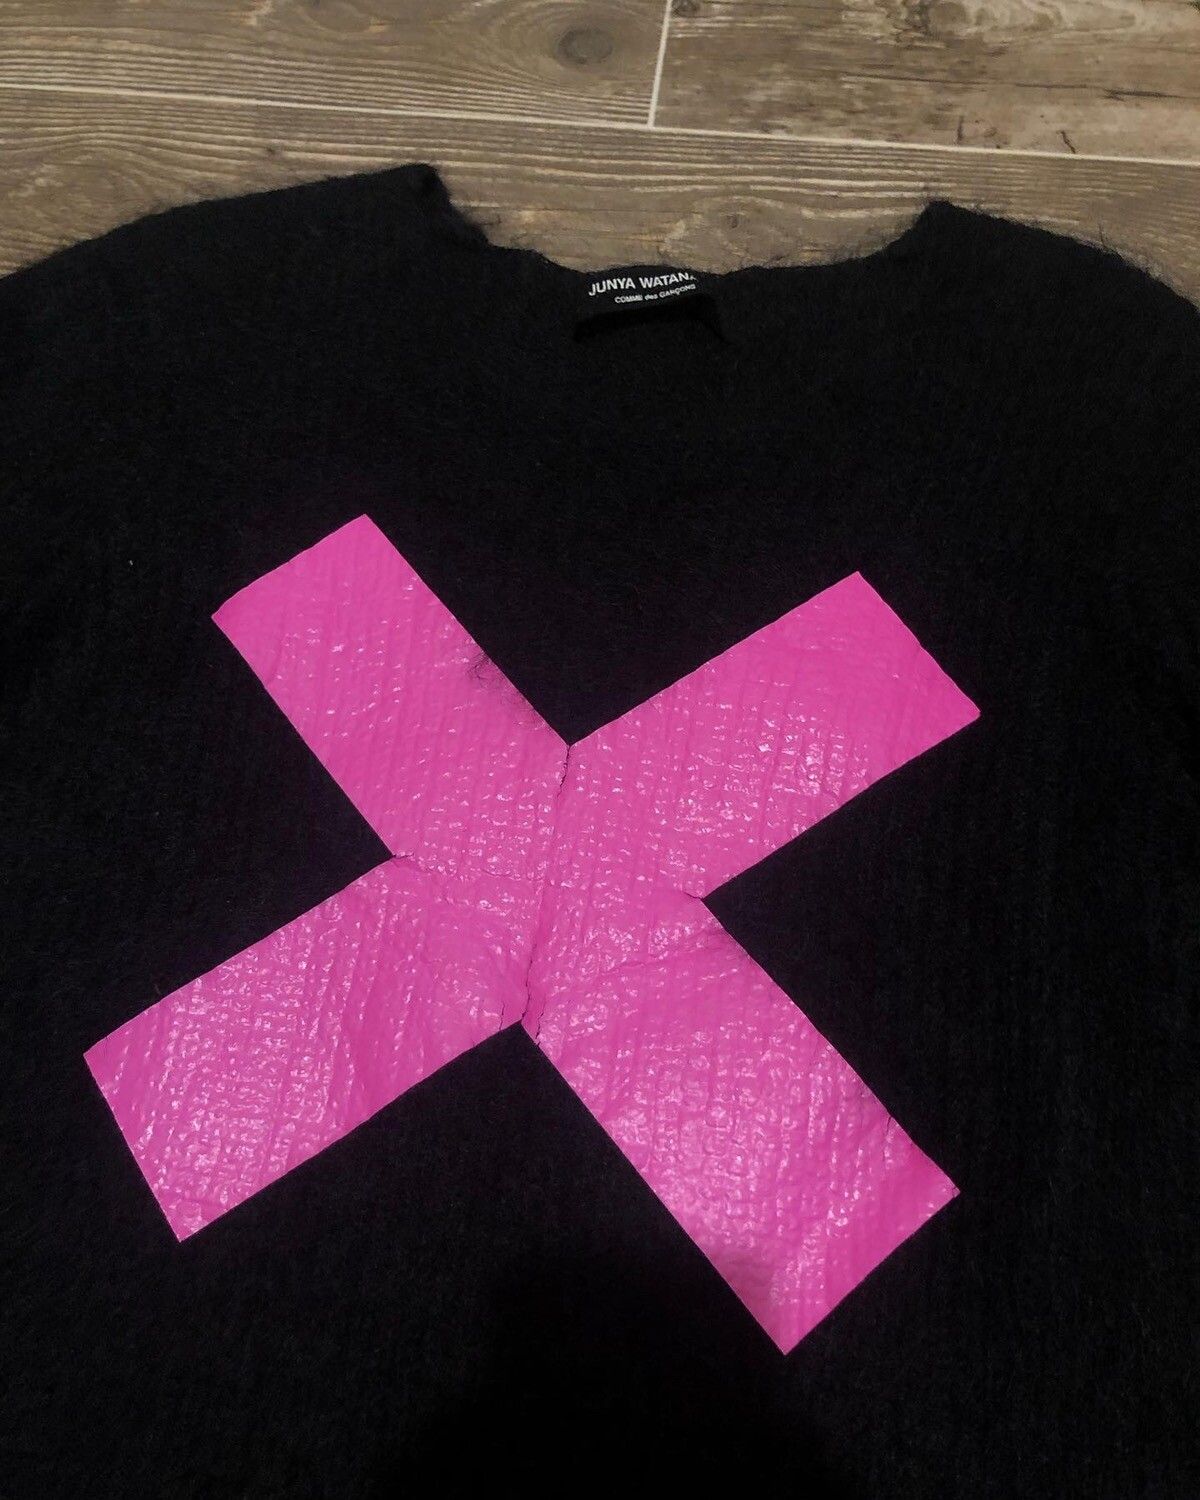 Junya Watanabe Junya Watanabe AW95 “X” Cross Mohair Knit sweater Size US M / EU 48-50 / 2 - 2 Preview